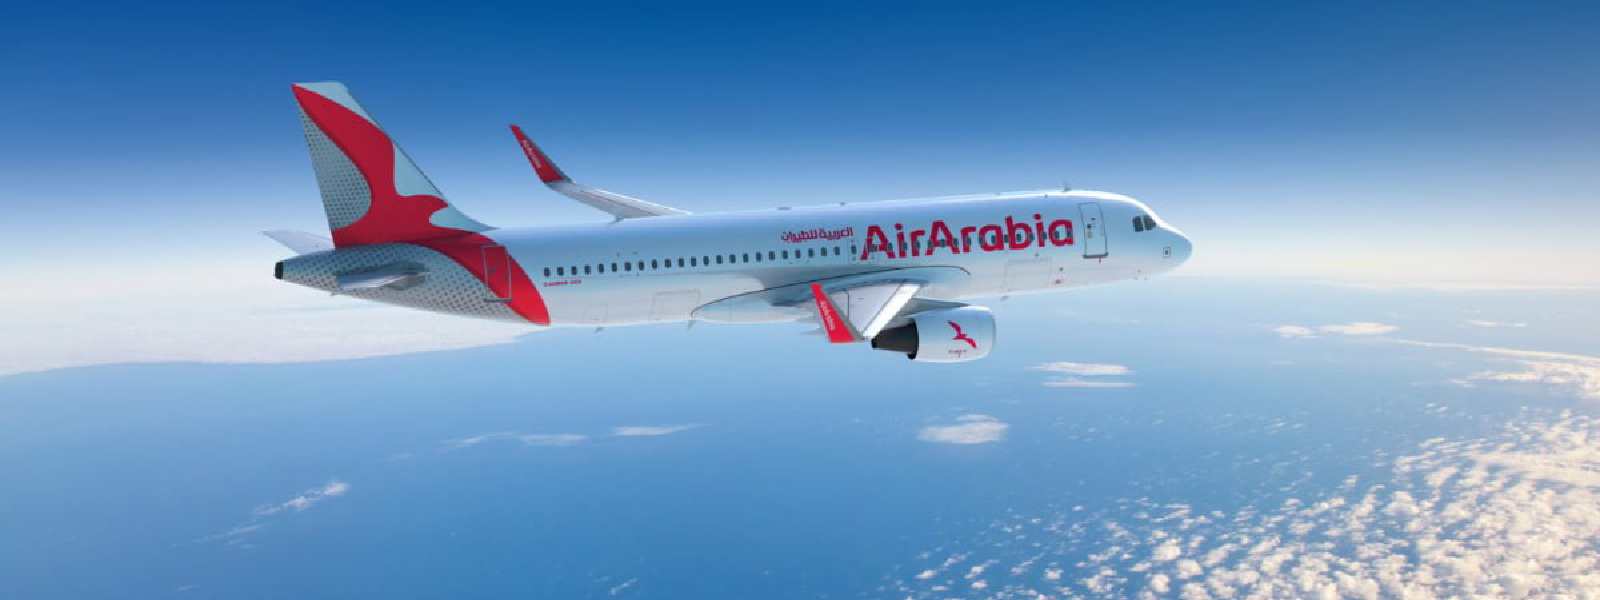 Air Arabia Abu Dhabi adds first Sri Lanka Service